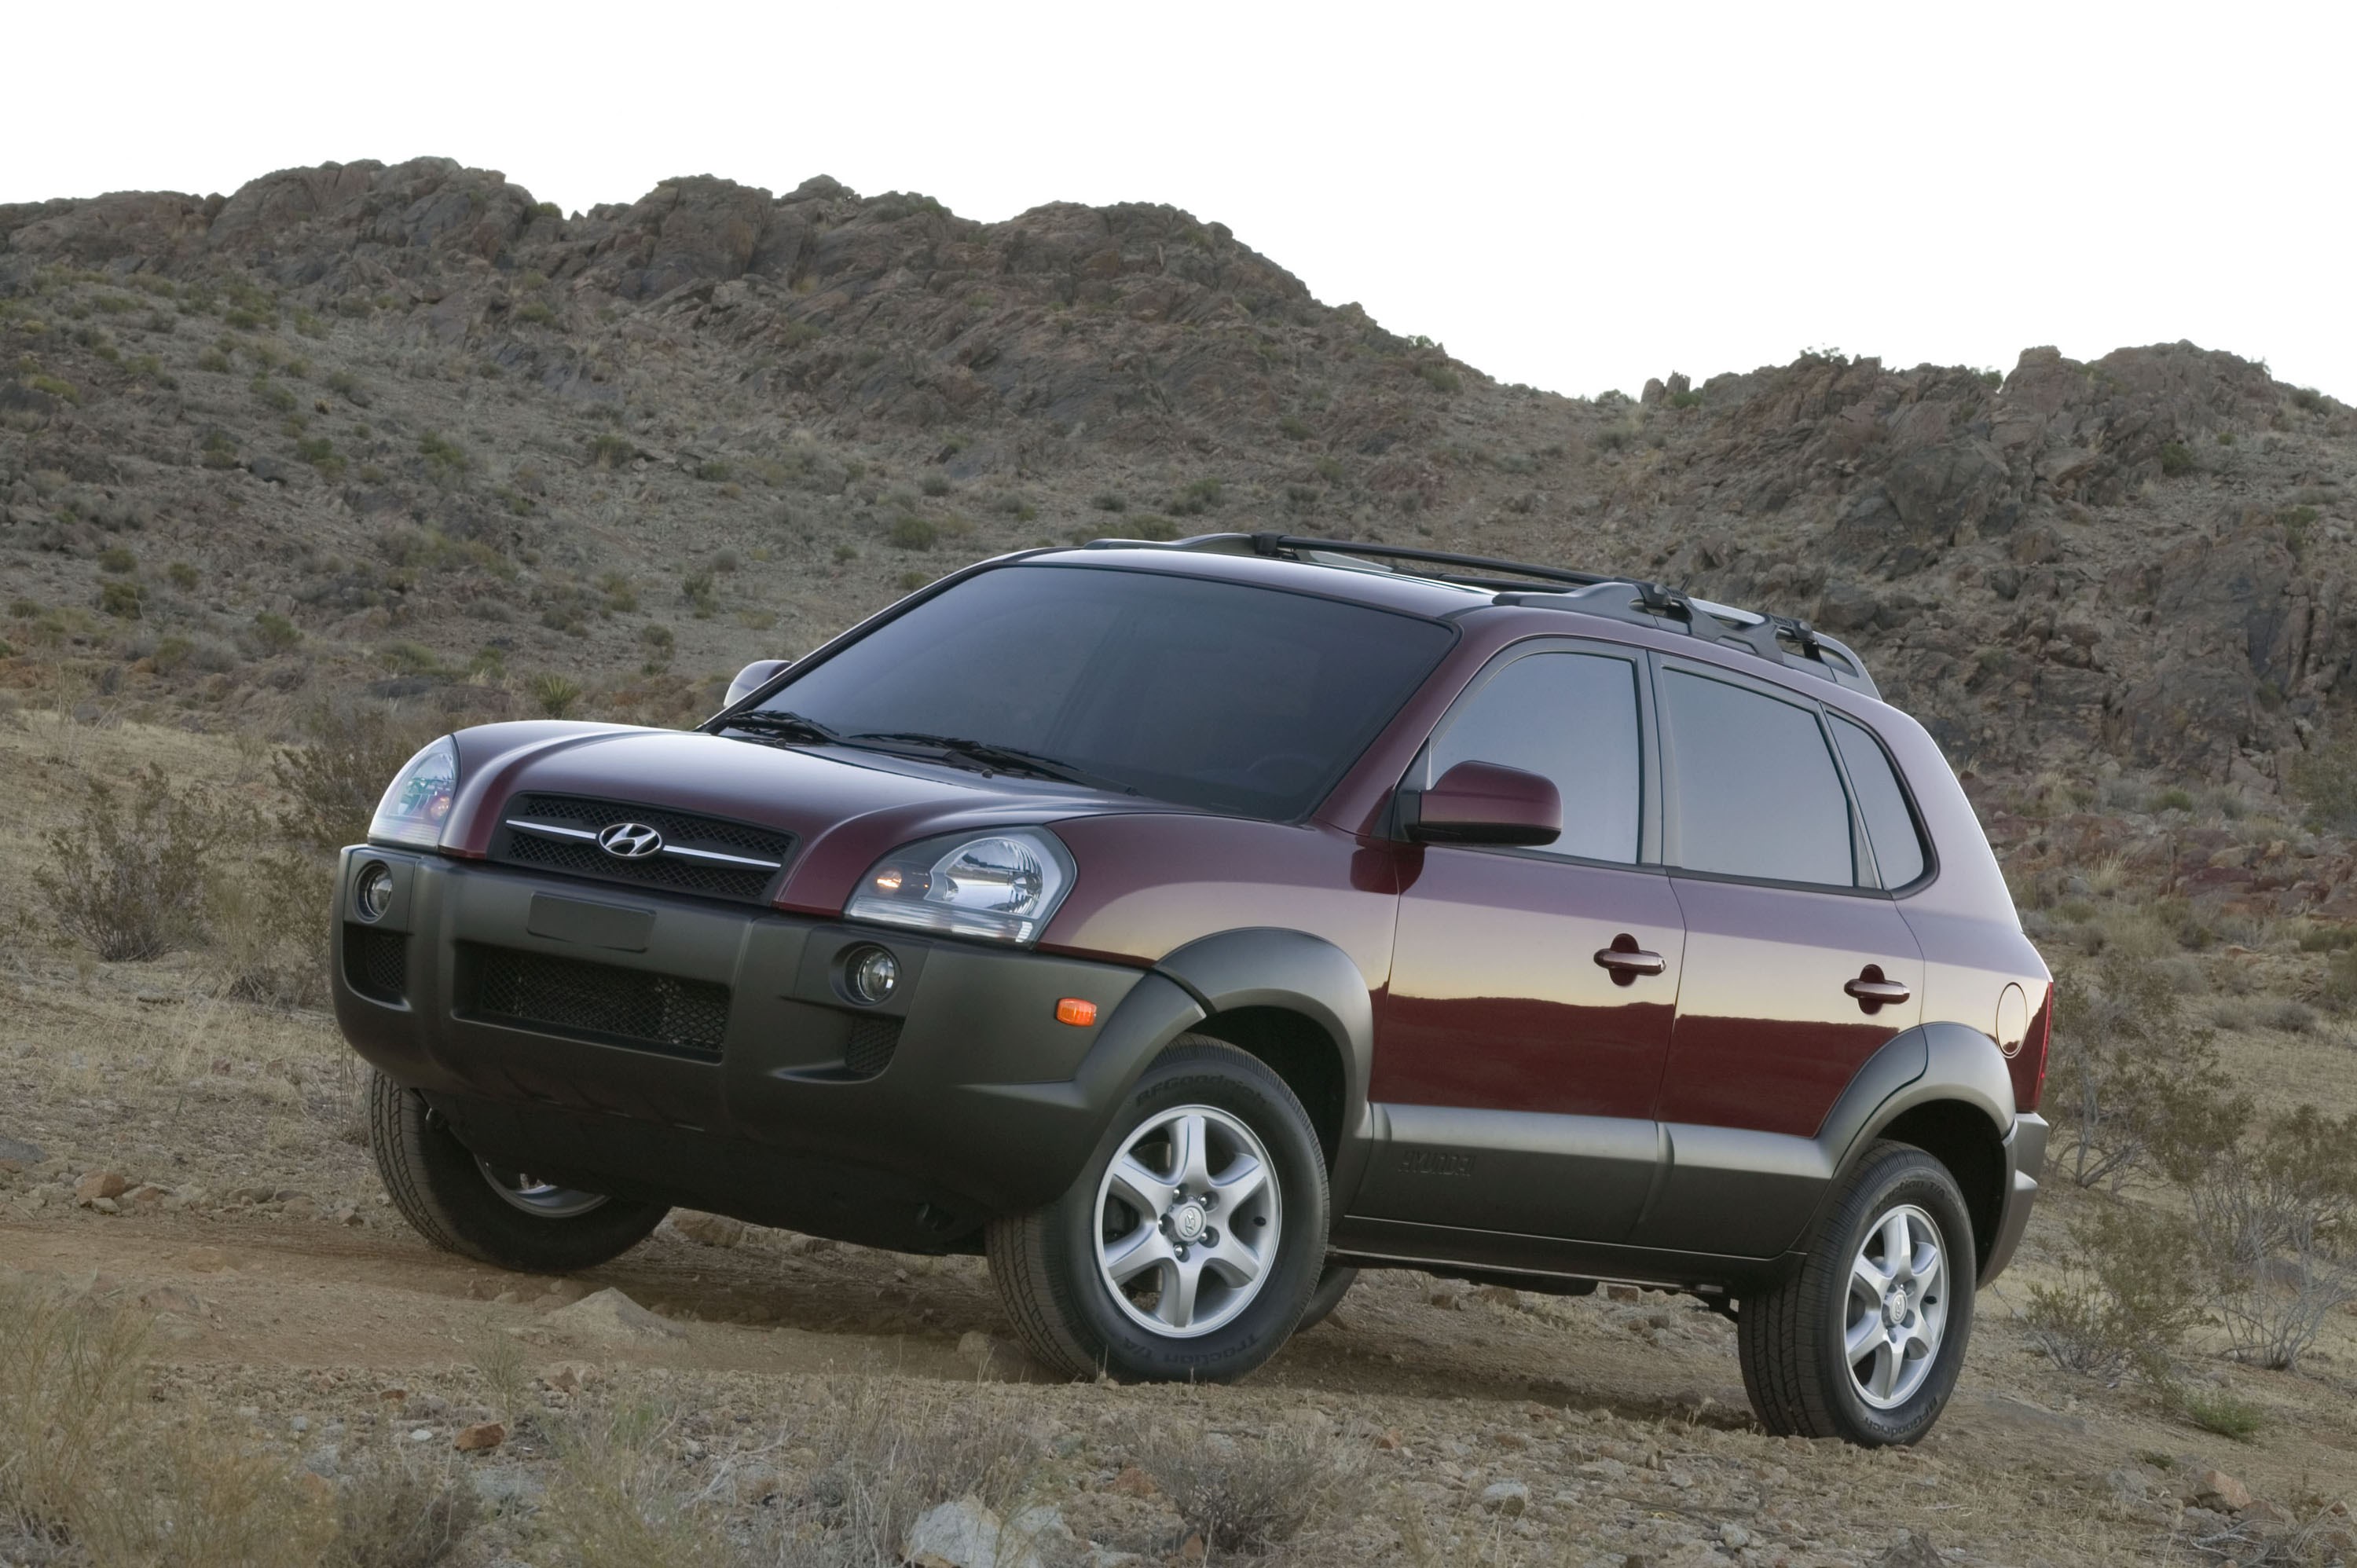 Туссан 2006 год. Хендай Туссан 2005. Hyundai Tucson 2004. Хендай Туссан 2008. Hyundai Tucson 2004-2005.